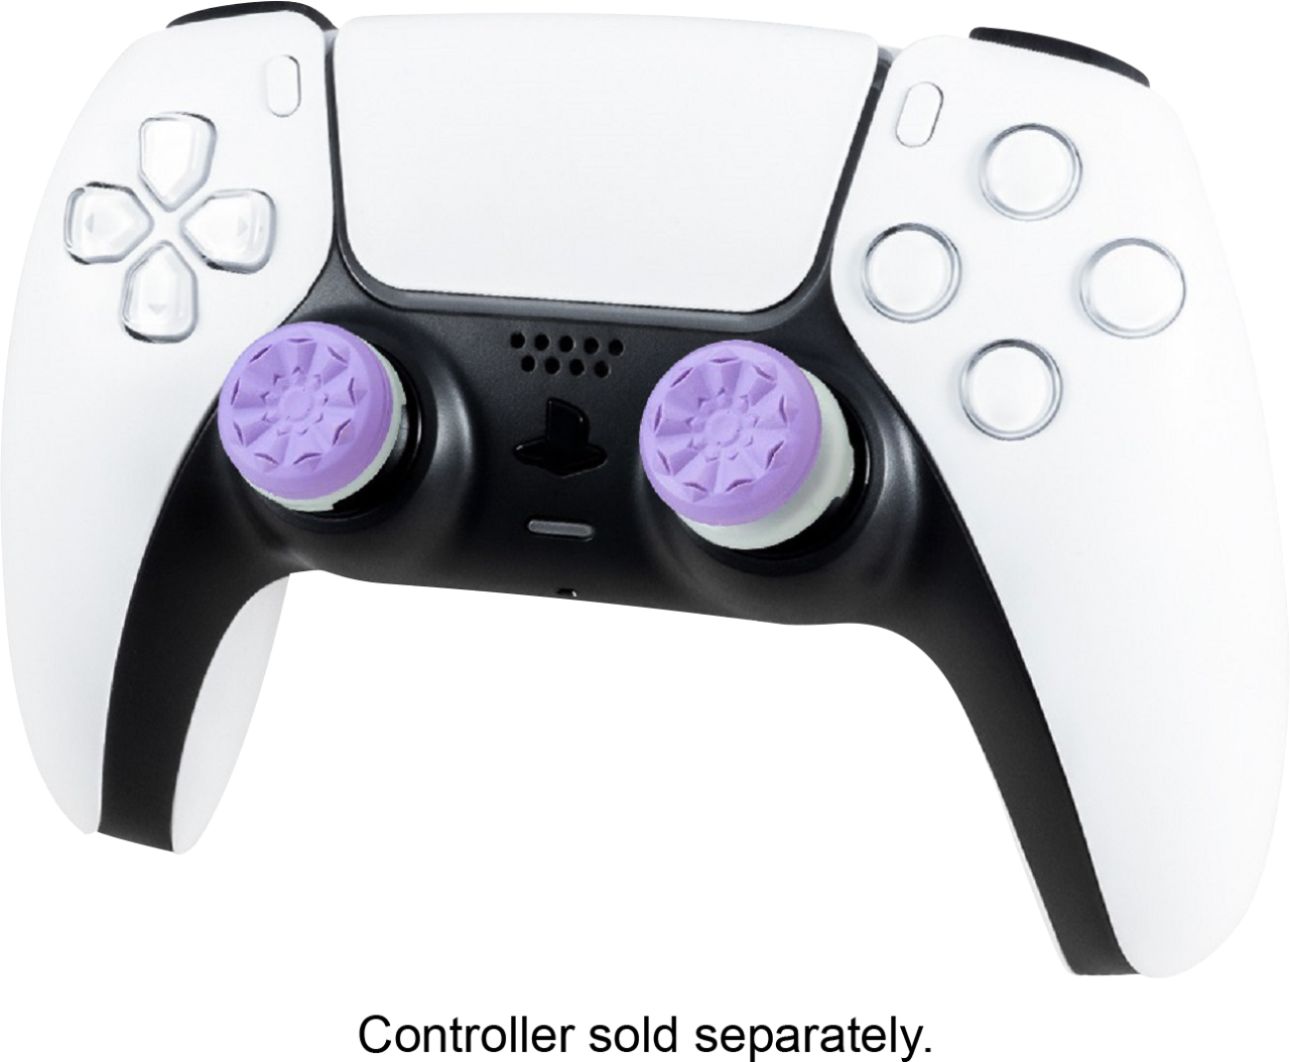 target ps4 controller purple